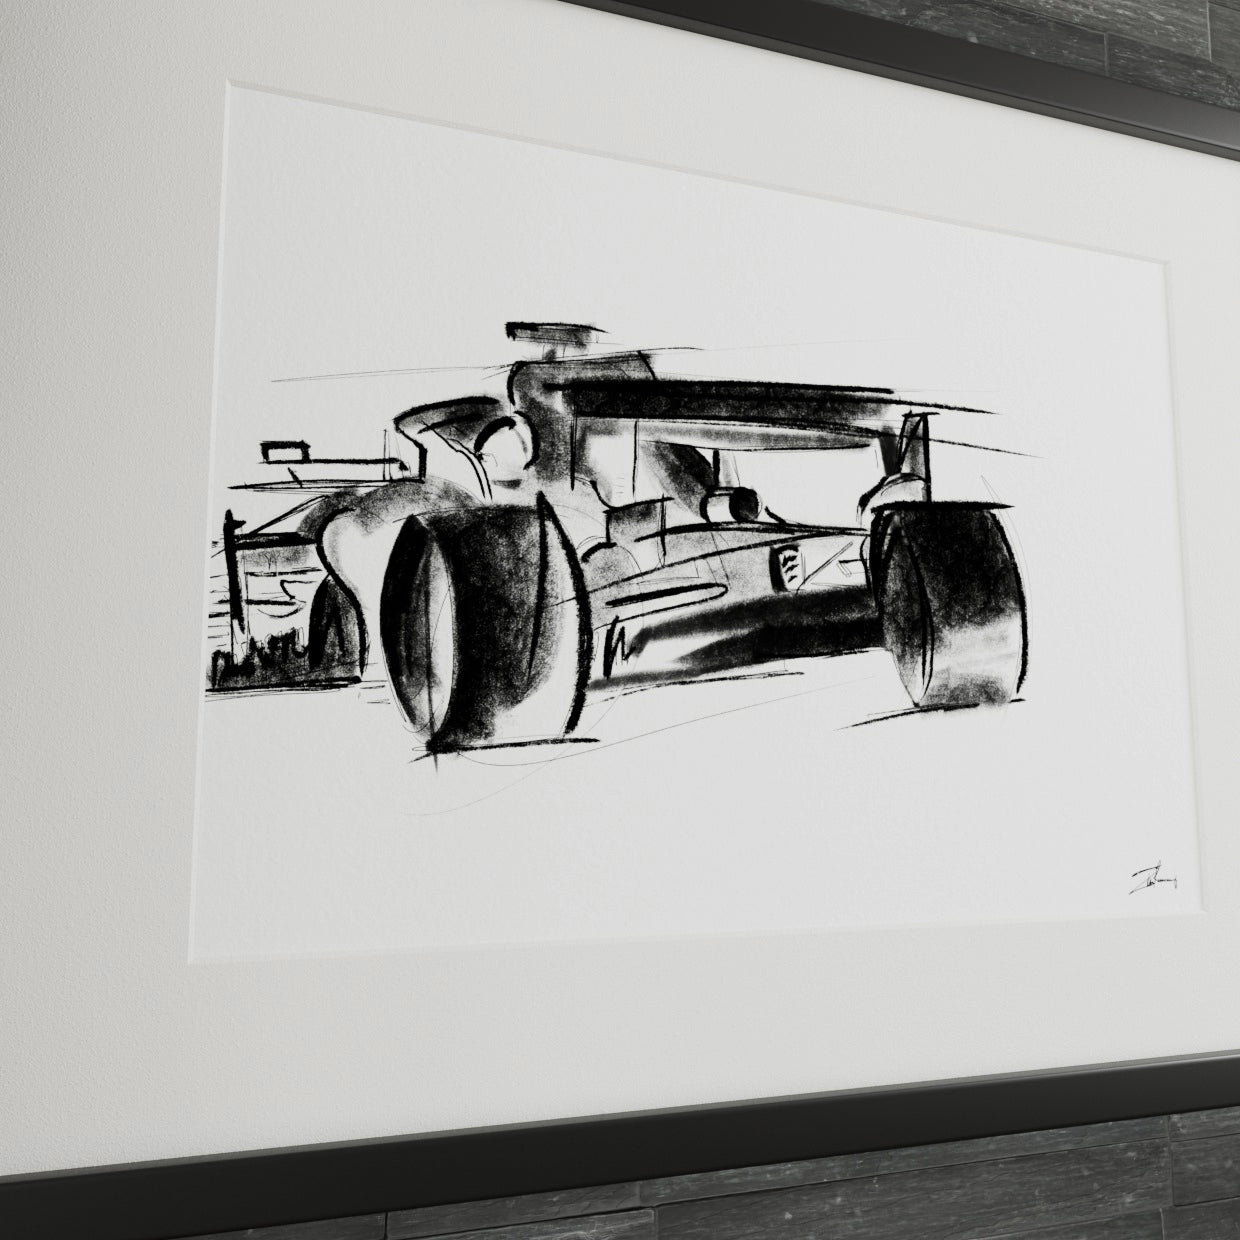 Artist Drawn F1 Car - Framed Print 03